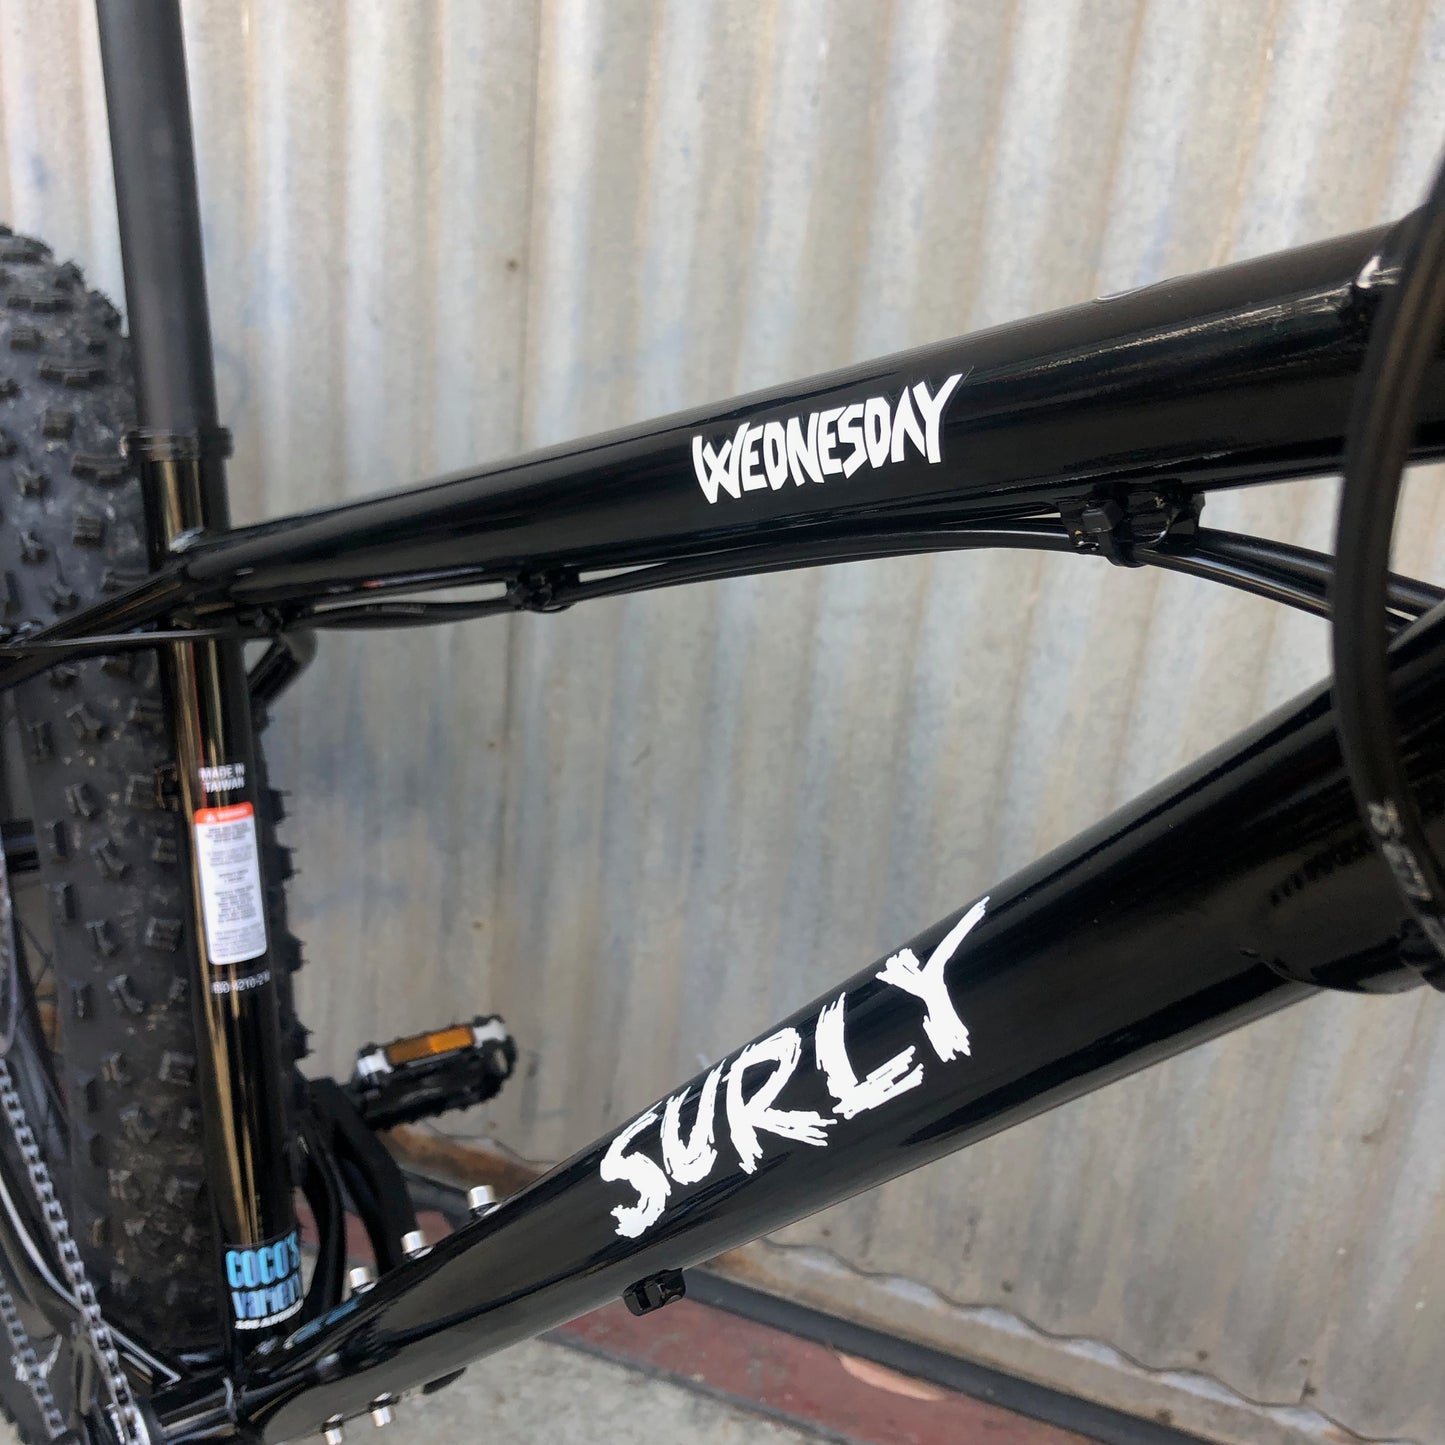 Surly Wednesday - Highly Versatile Fat Bike